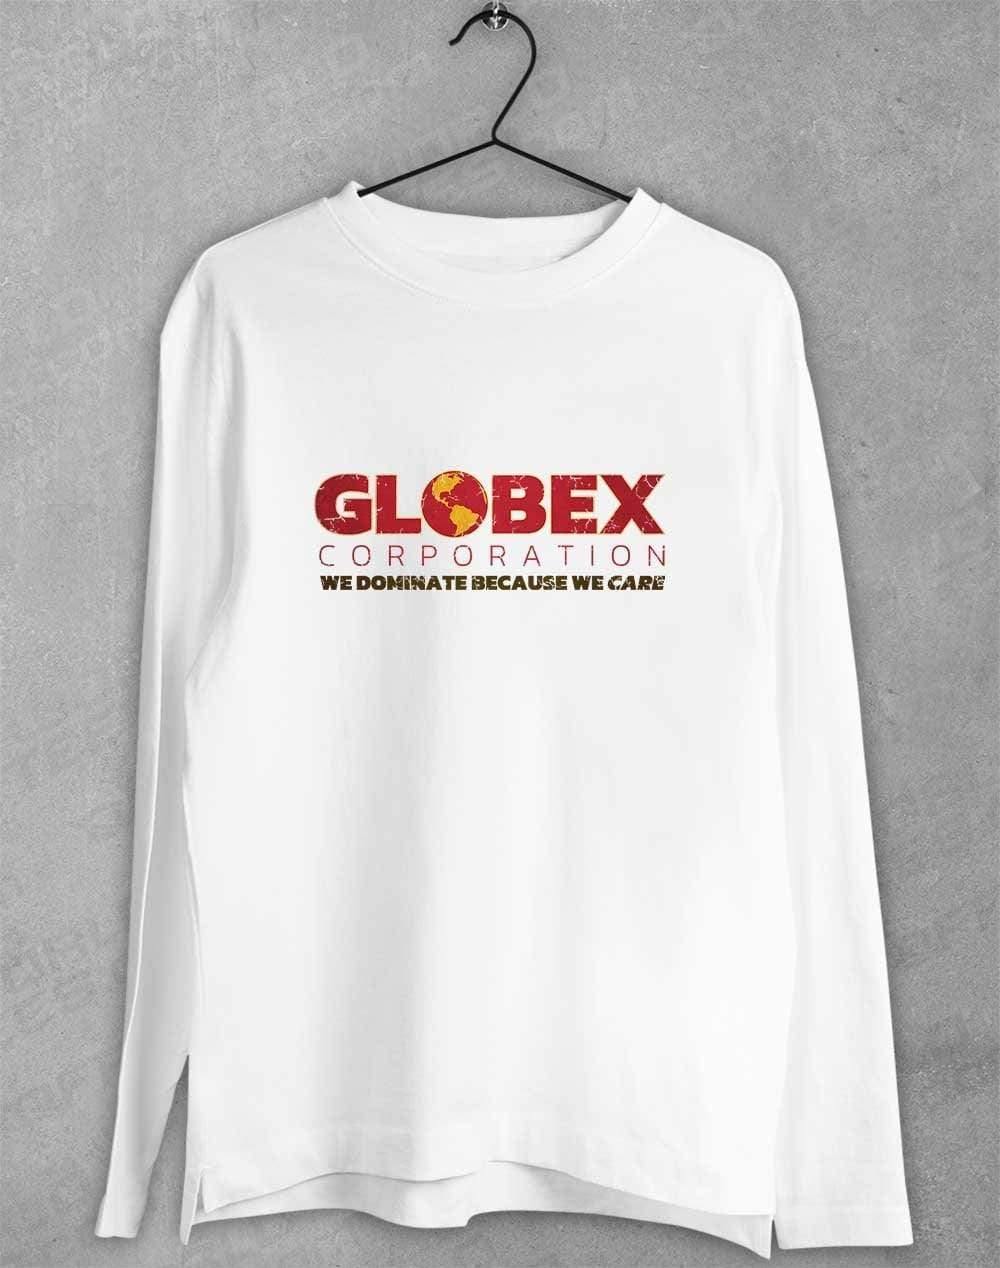 Globex Corporation Long Sleeve T-Shirt S / White  - Off World Tees